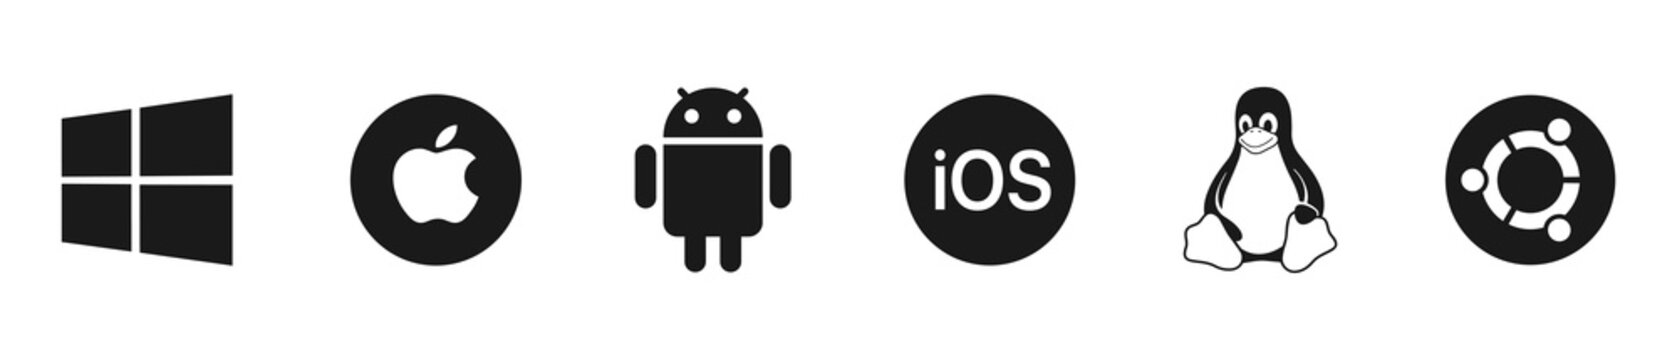 OS black logo set : Windows, Mac OS, Android, Apple IOS, Linux, Ubuntu. Modile and desktop Operating-System . OS logotype icons vector collection.